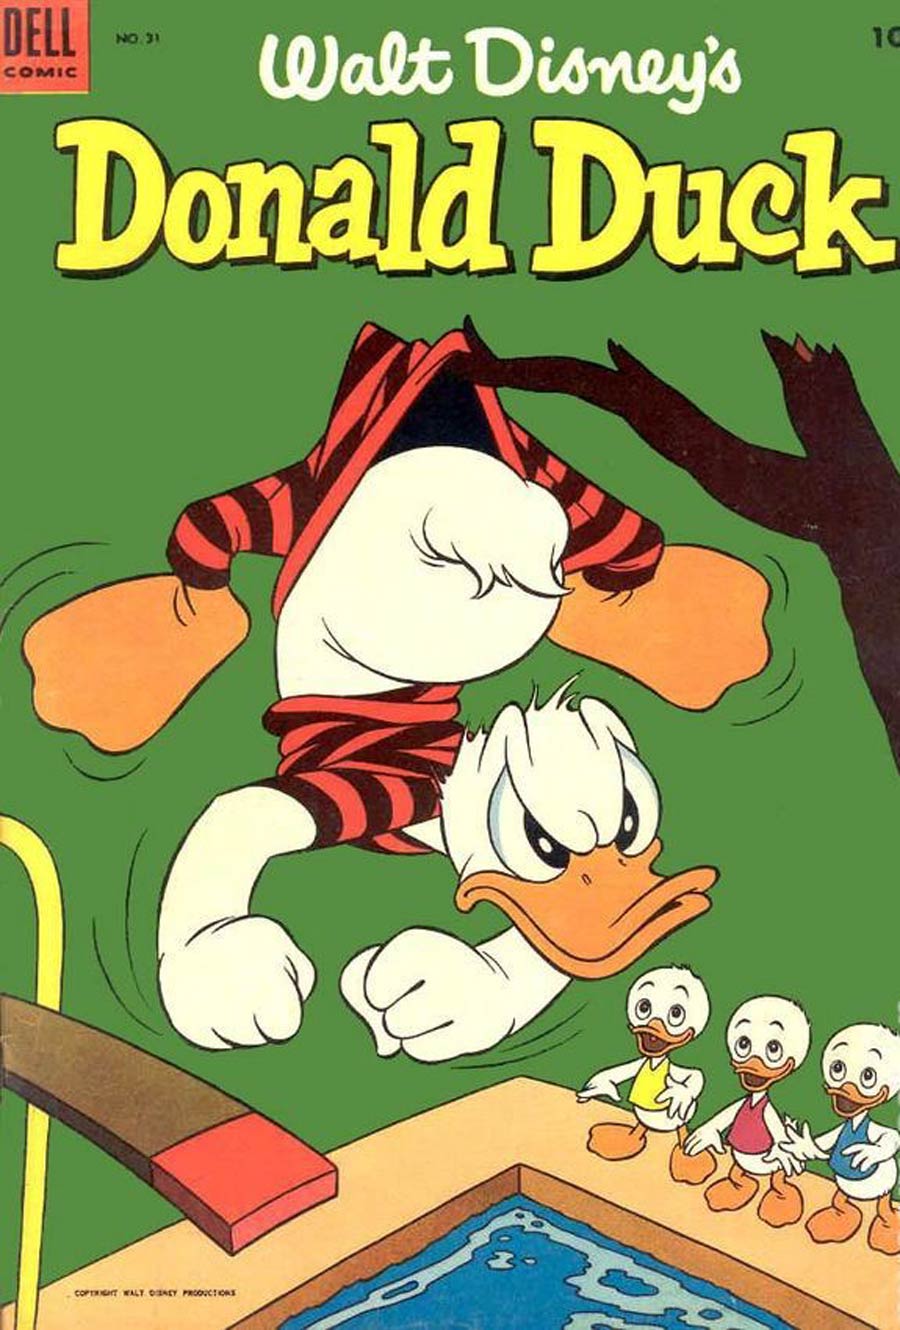 Donald Duck #31